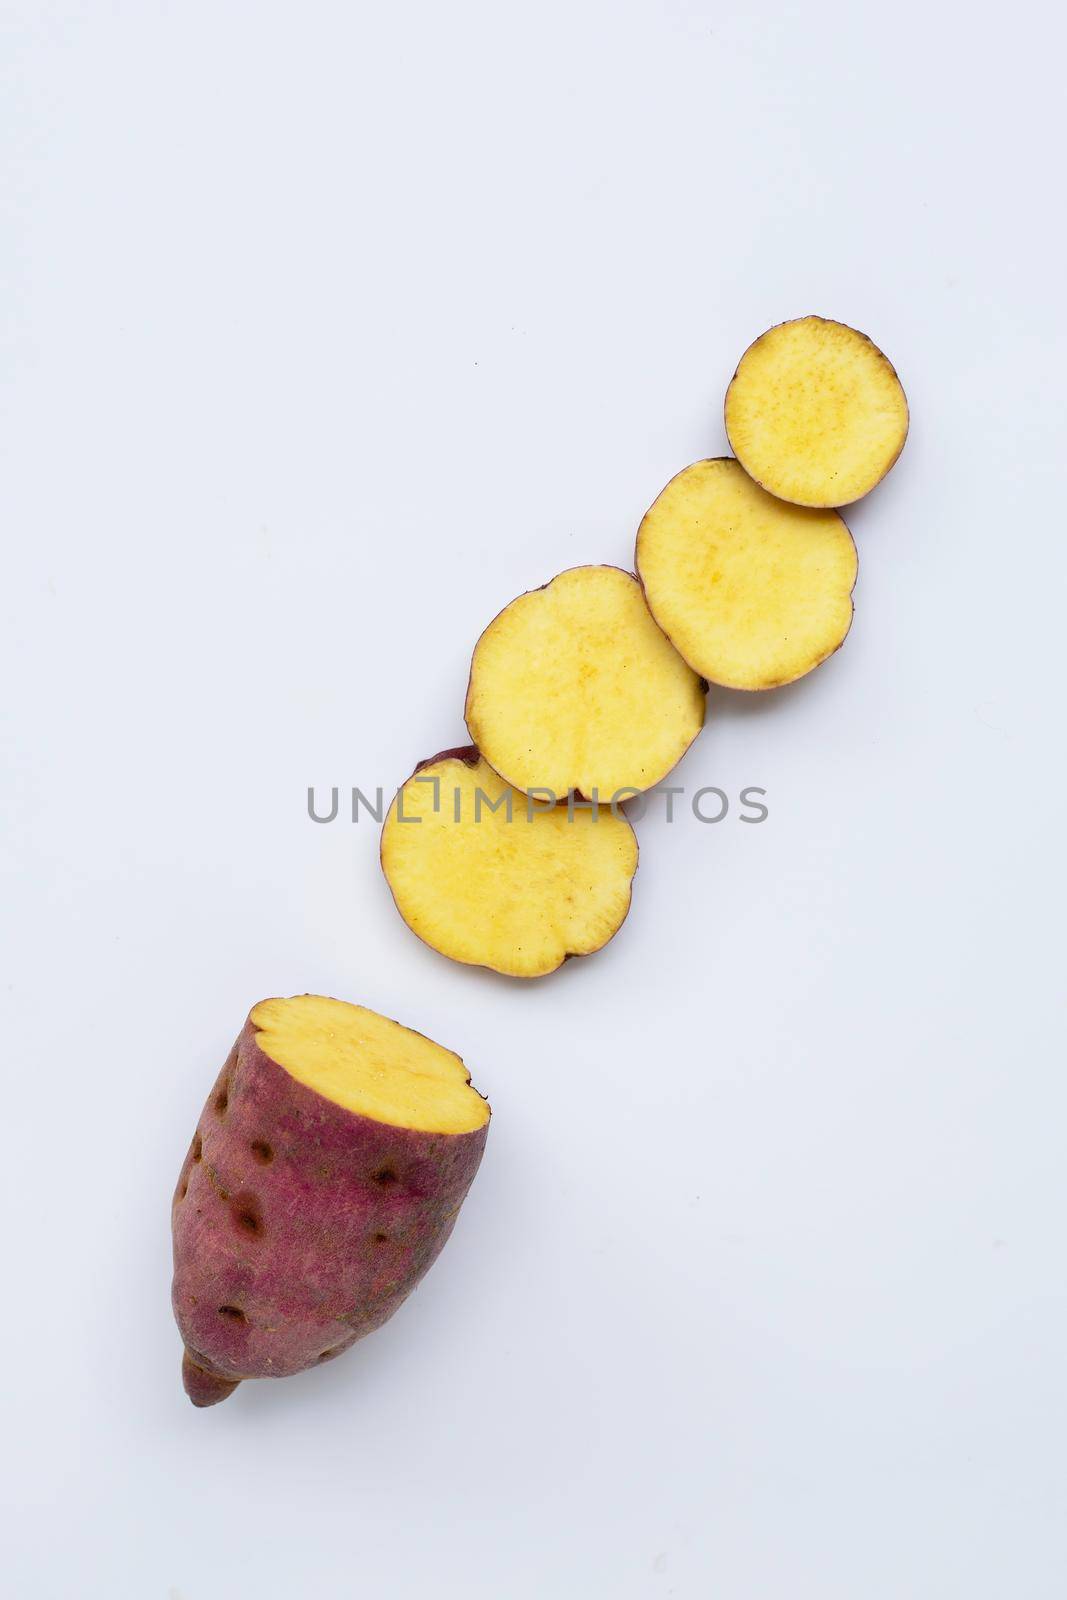 Sweet potato on white background. Top view by Bowonpat